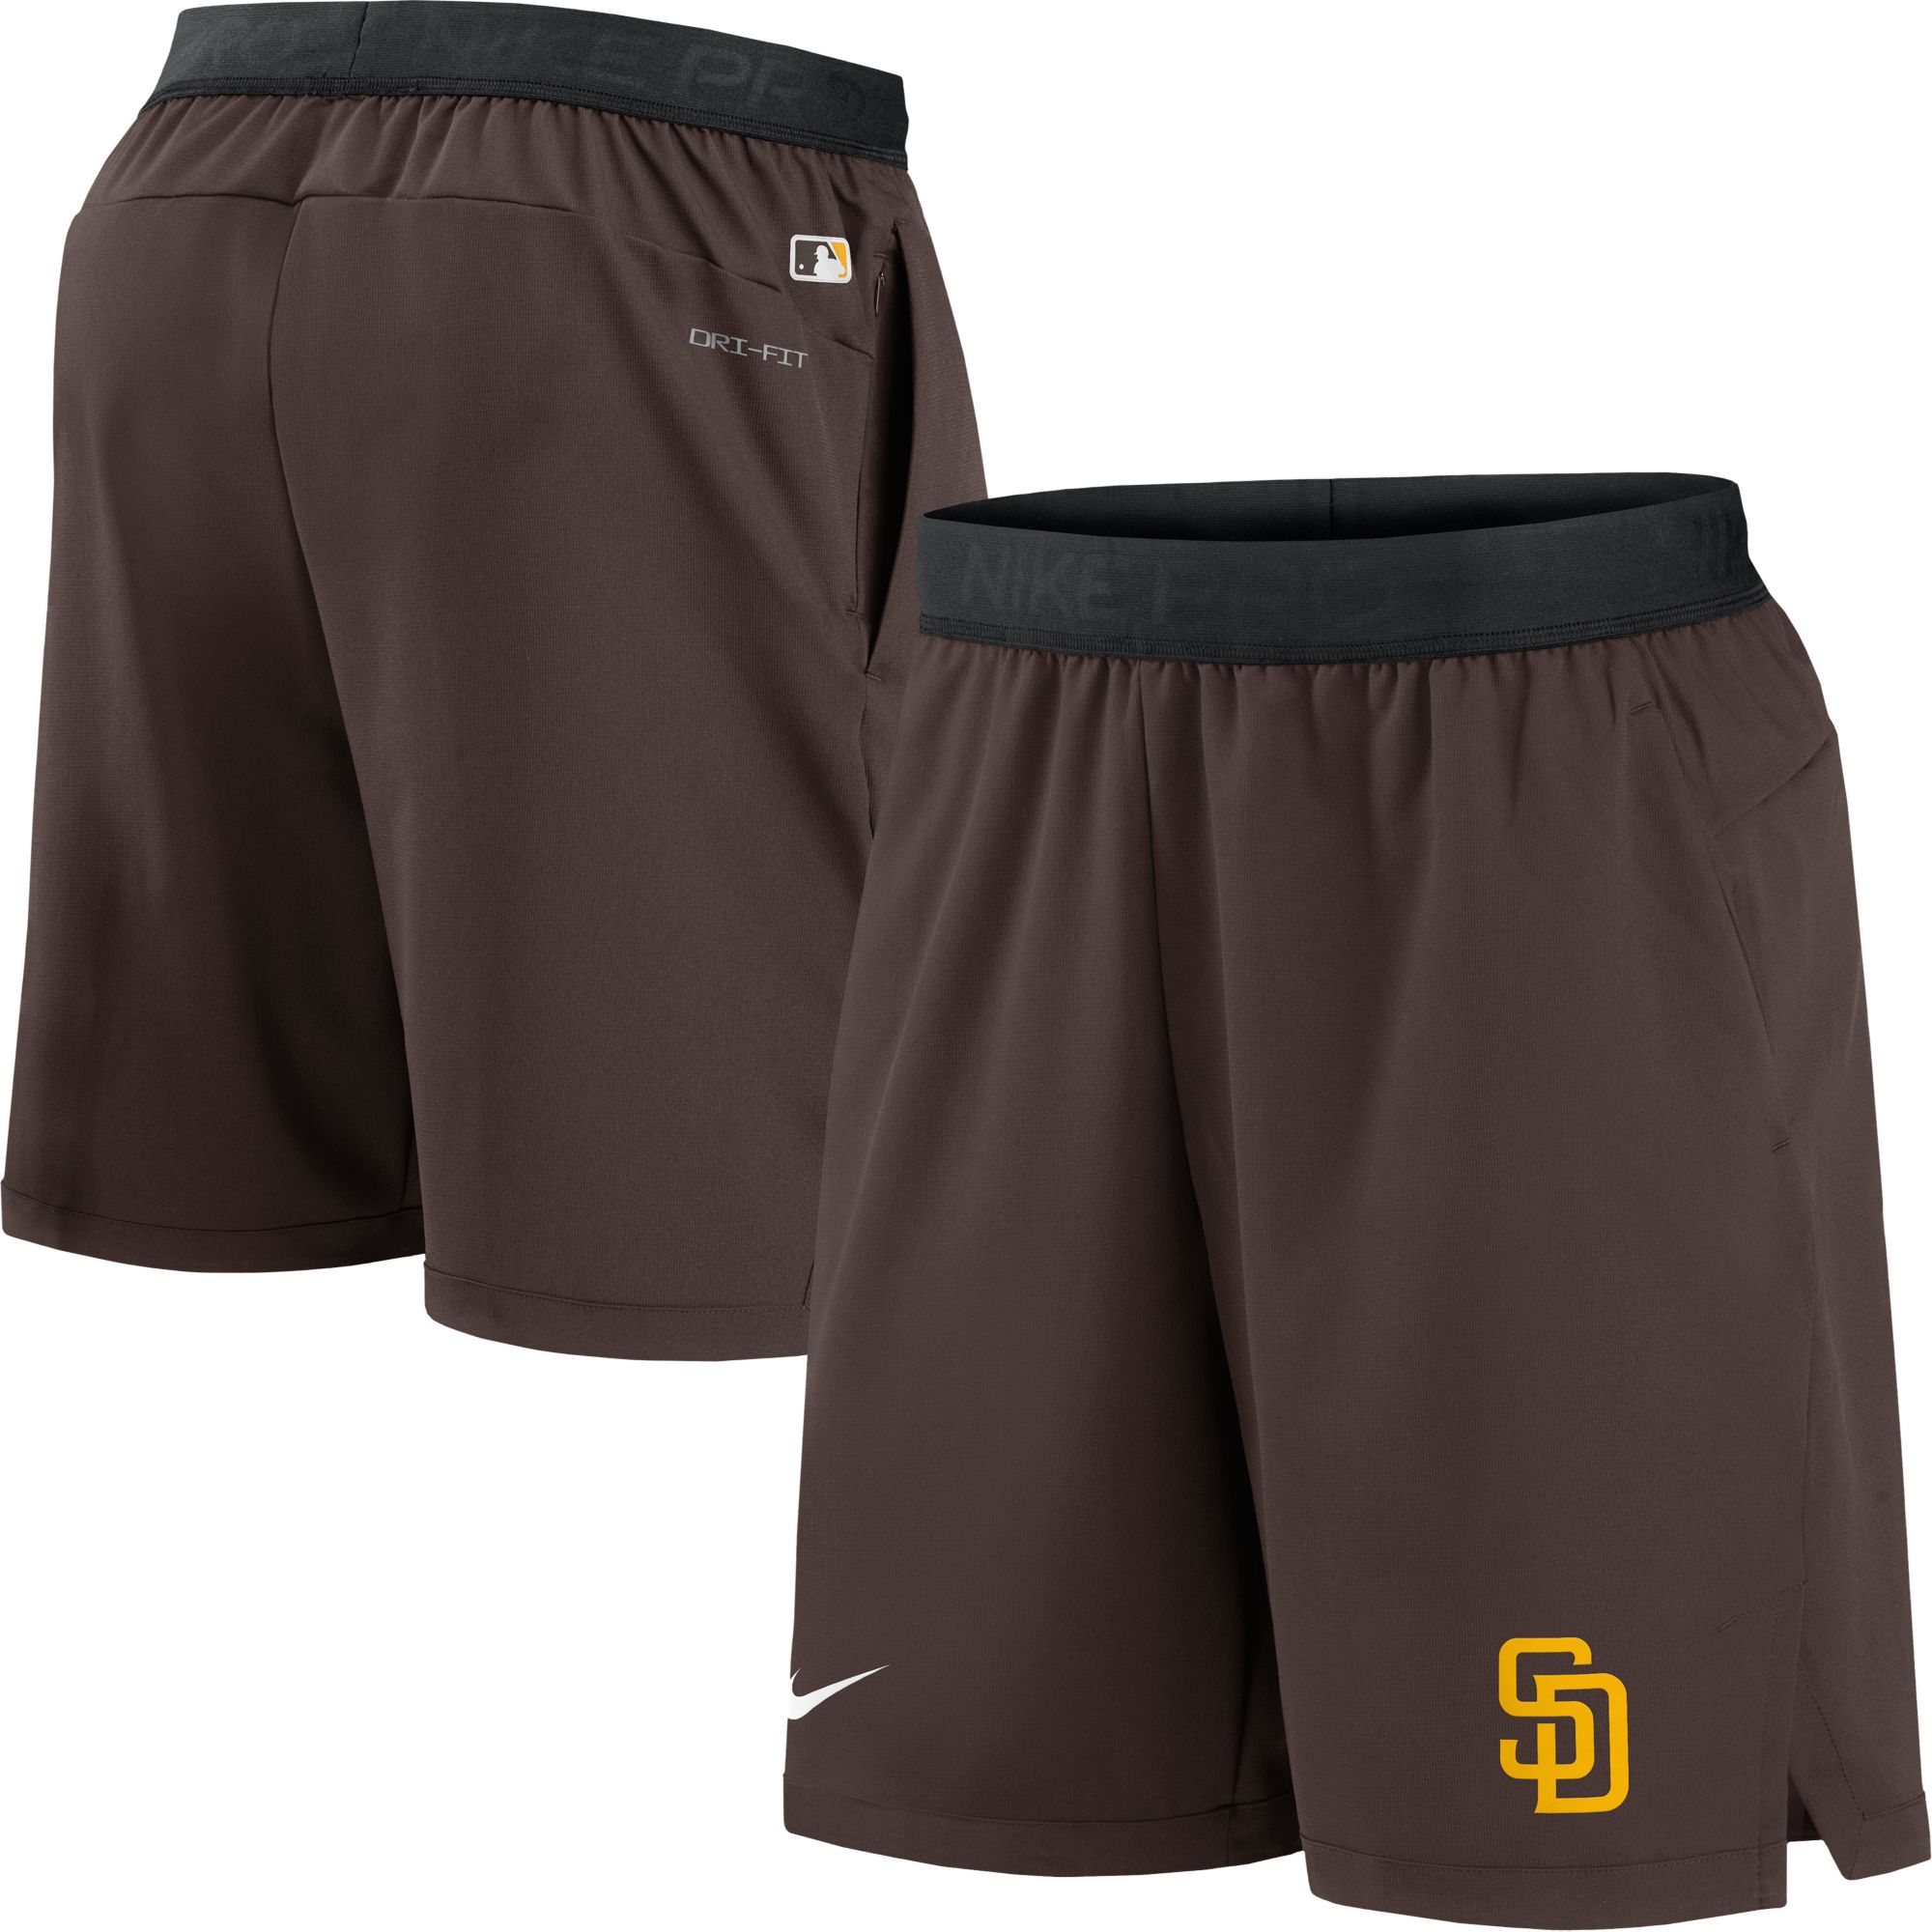 Nike / Men's San Diego Padres Brown Flex Vent Shorts